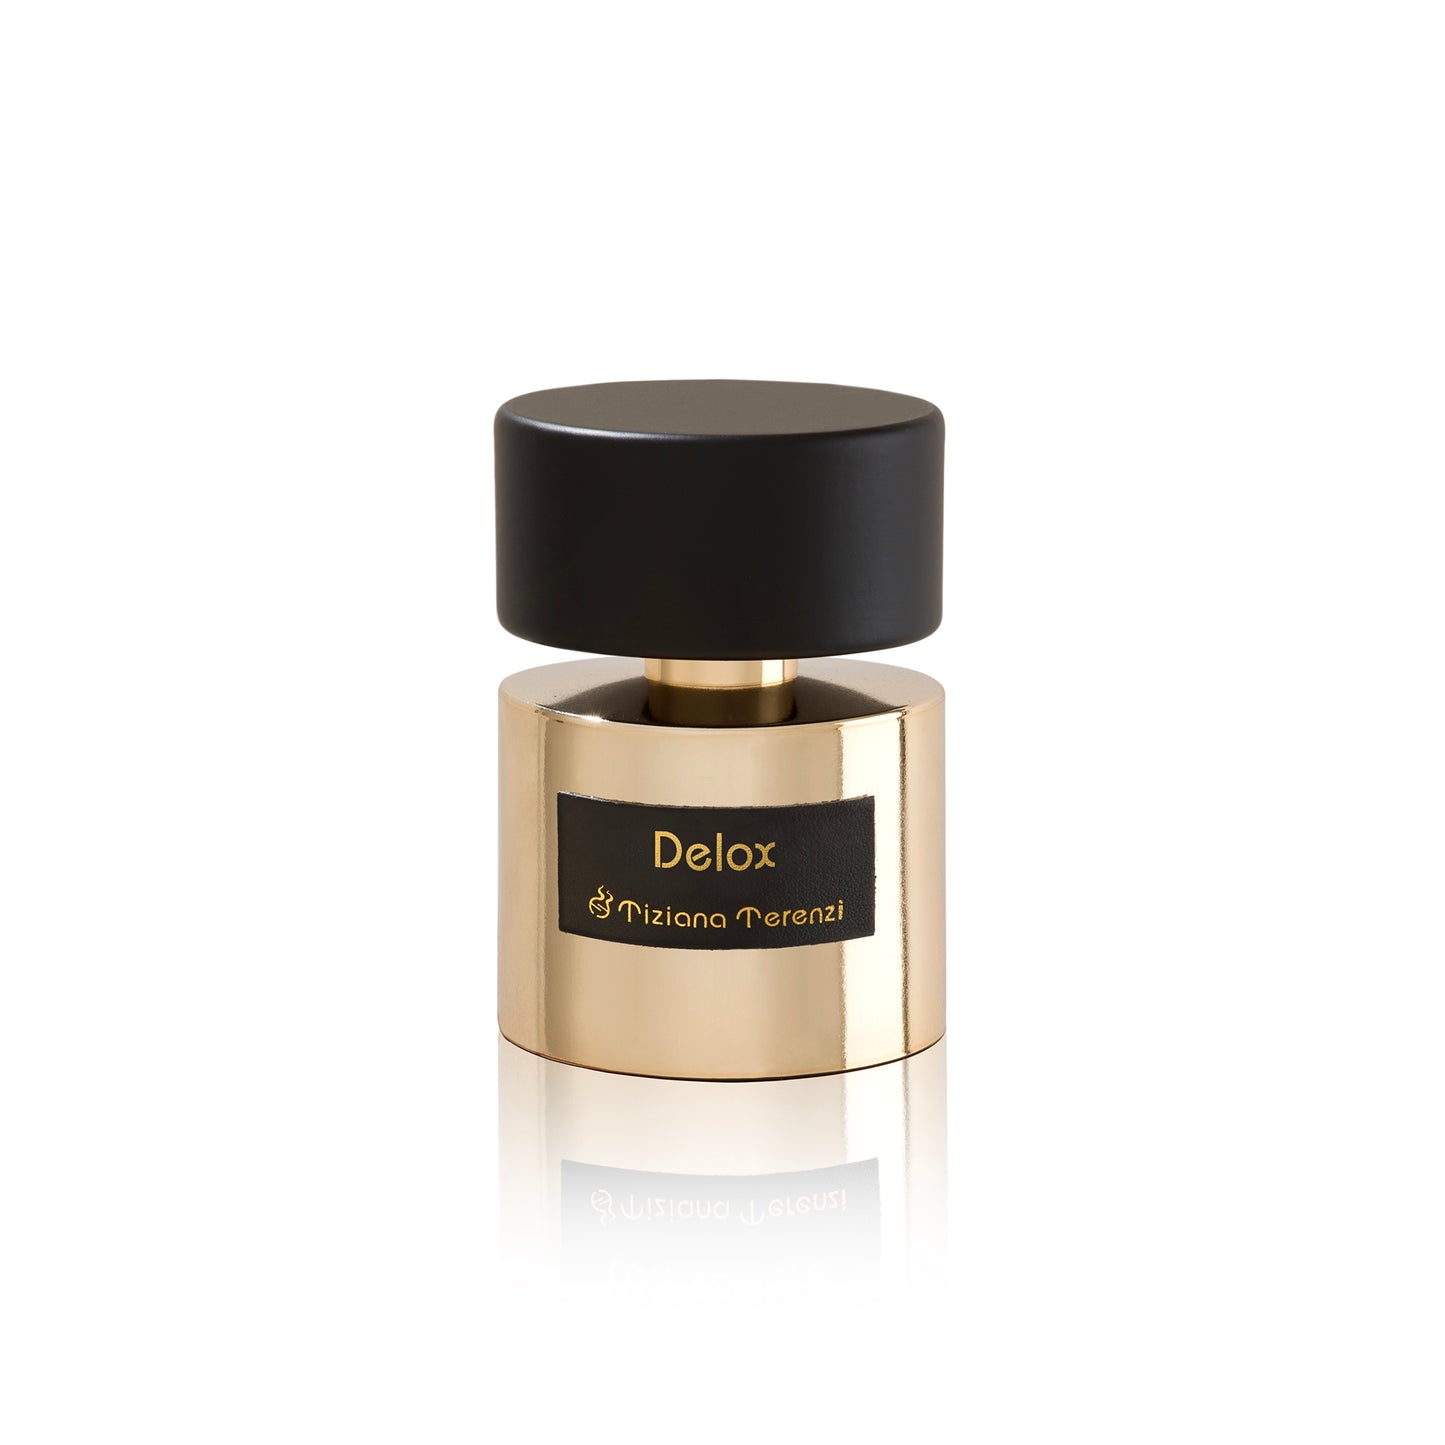 Delox 1.5ml Sample Vial - Extrait de Parfum